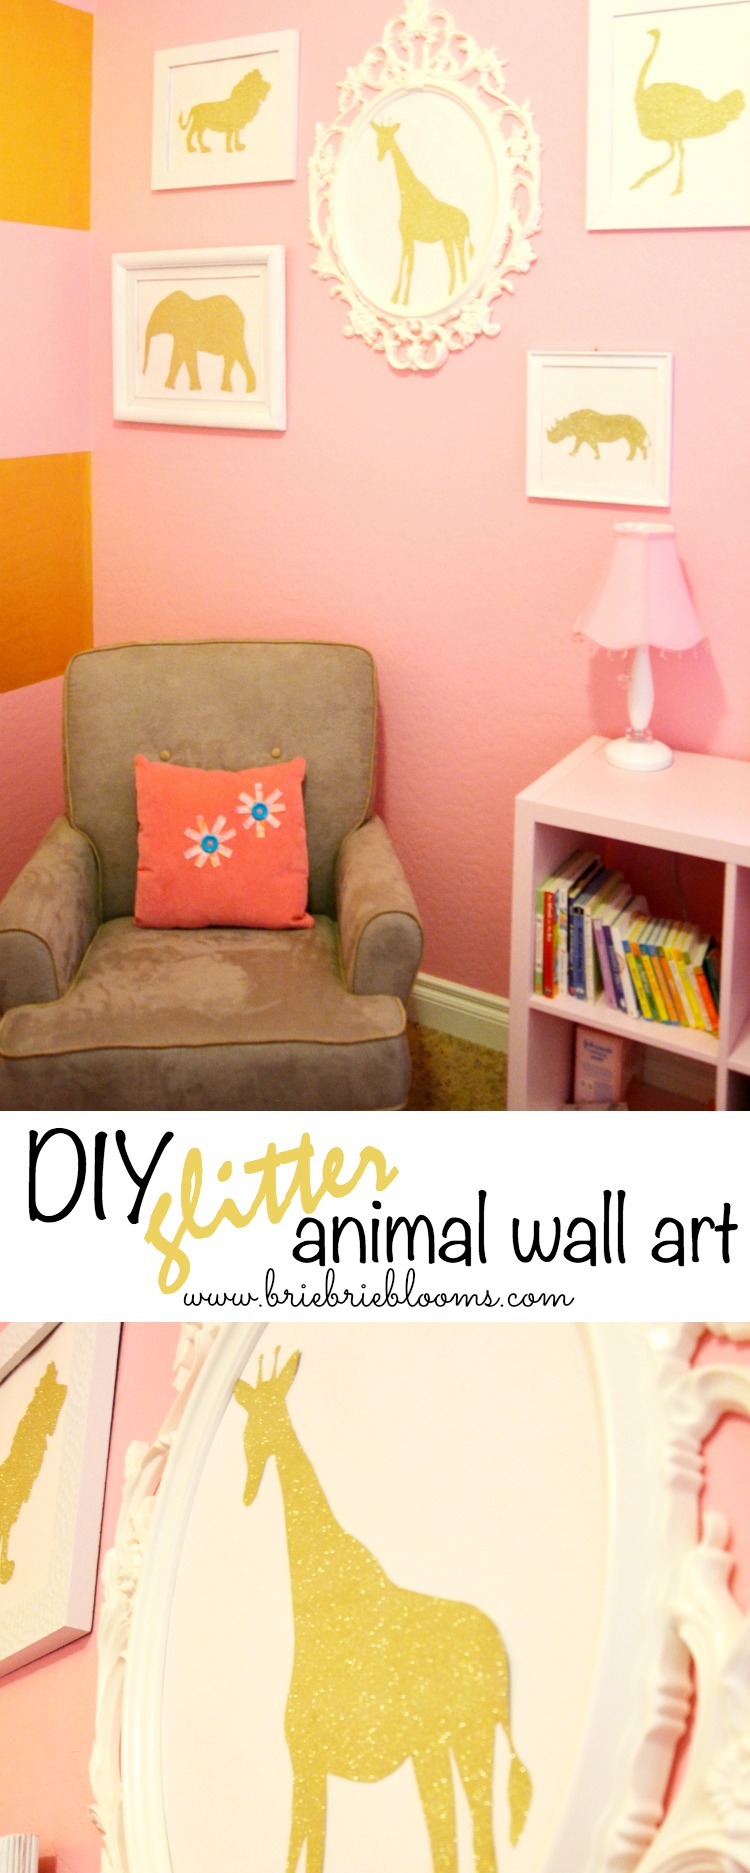 DIY-glitter-animal-wall-art